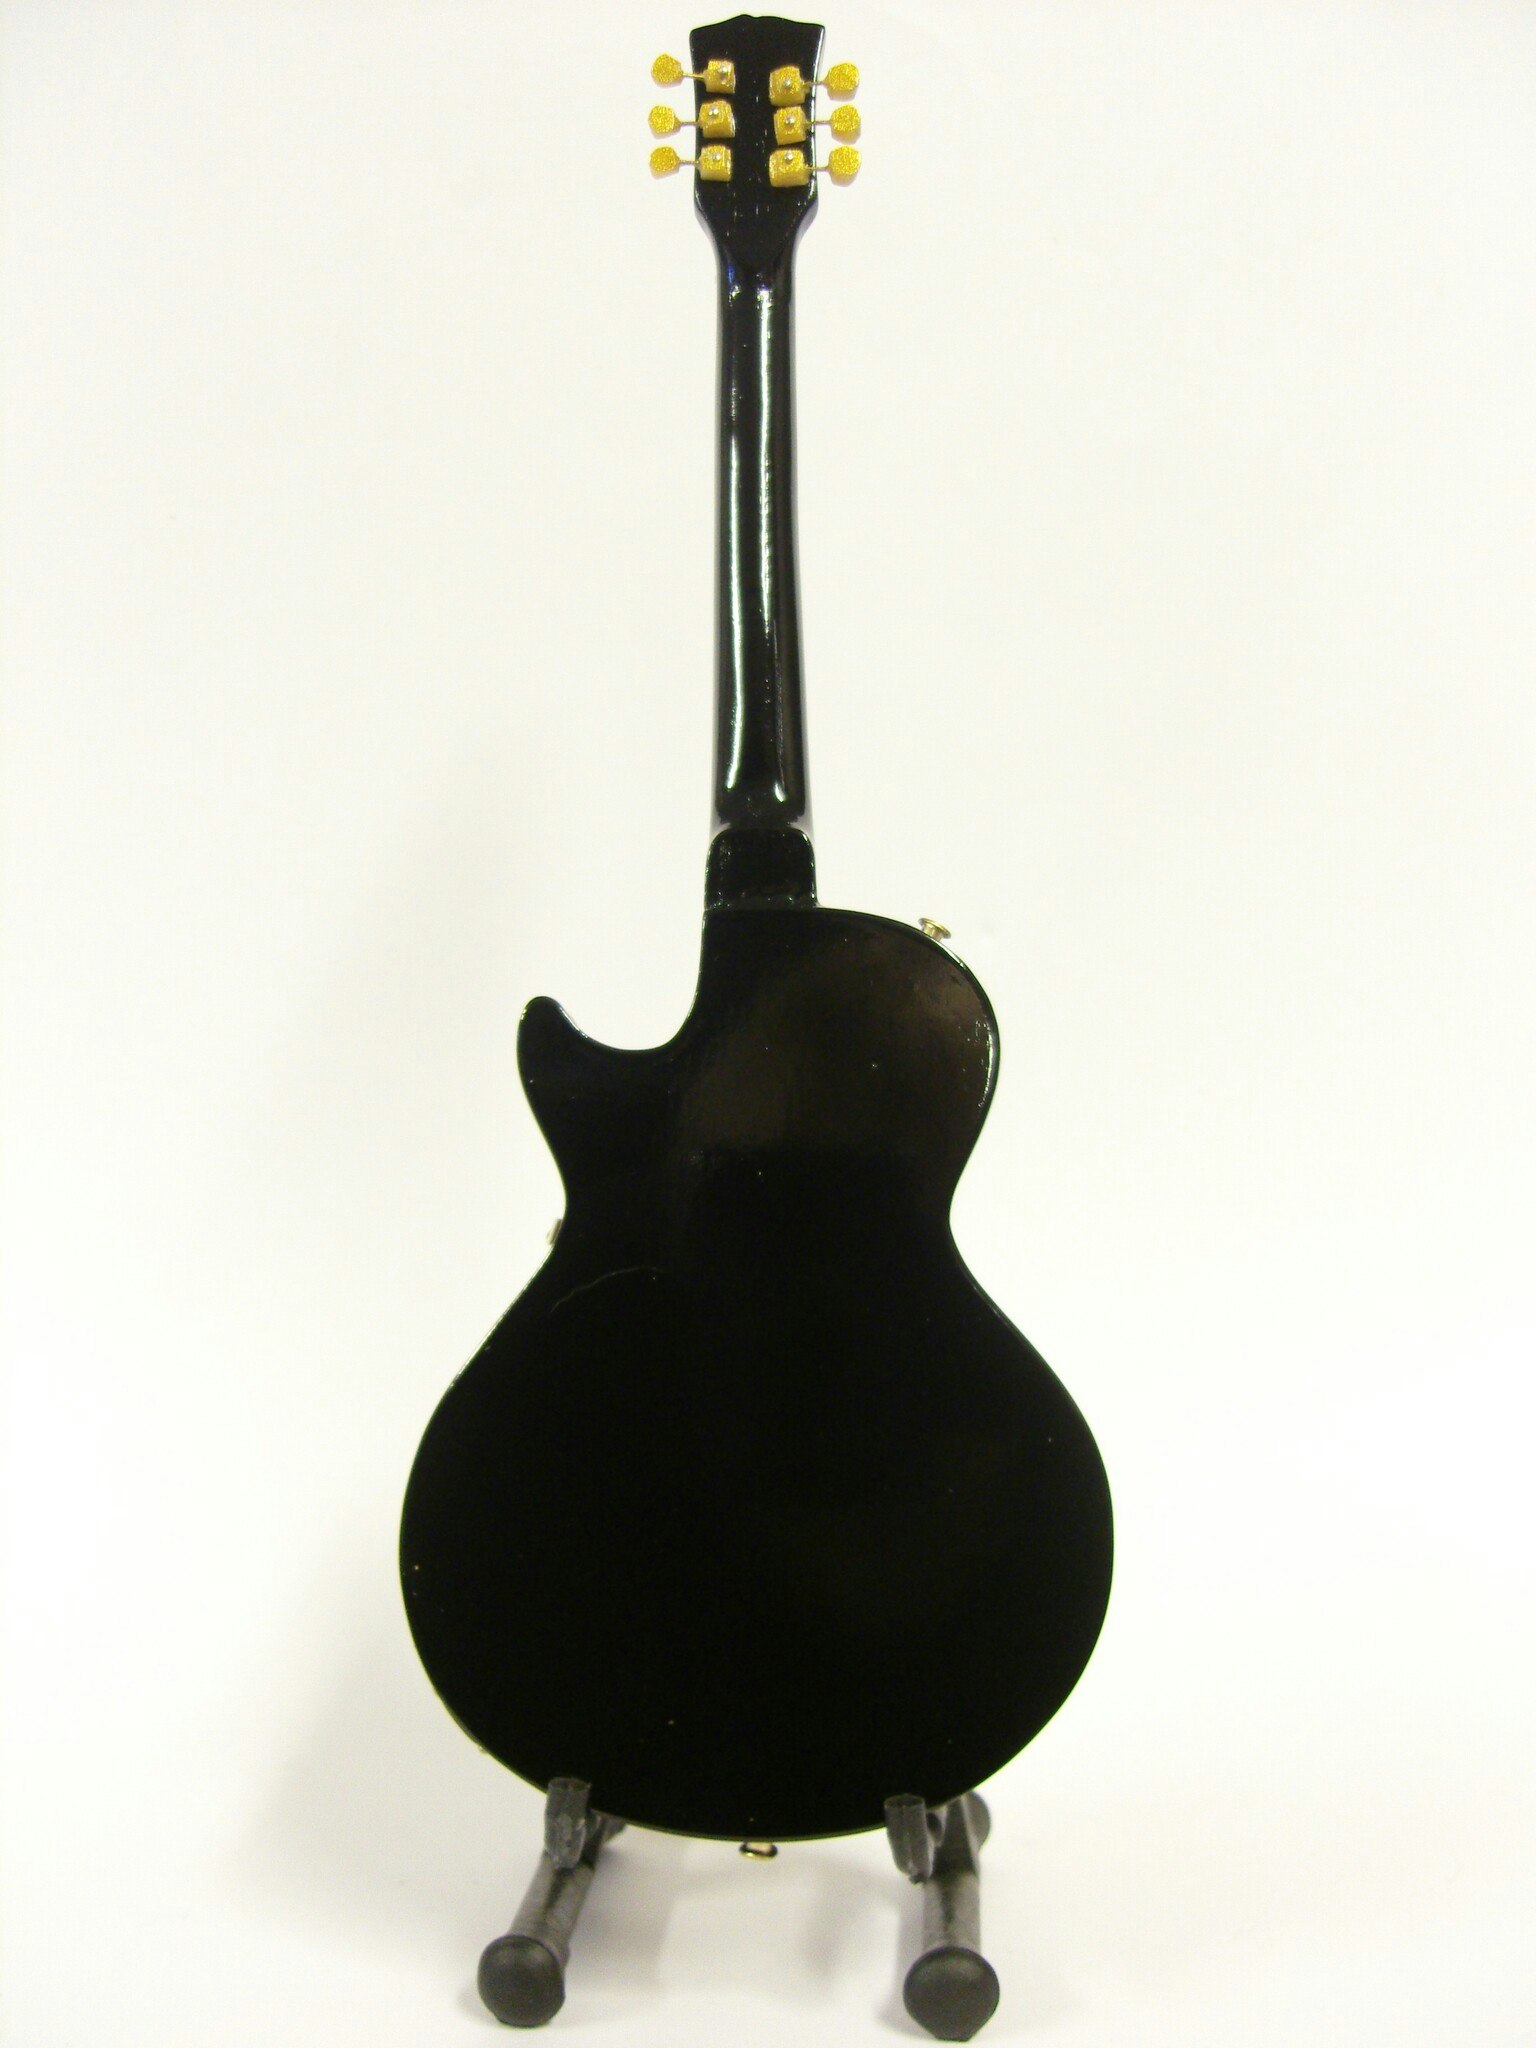 Gibson Les paul "Black beauty" replika.